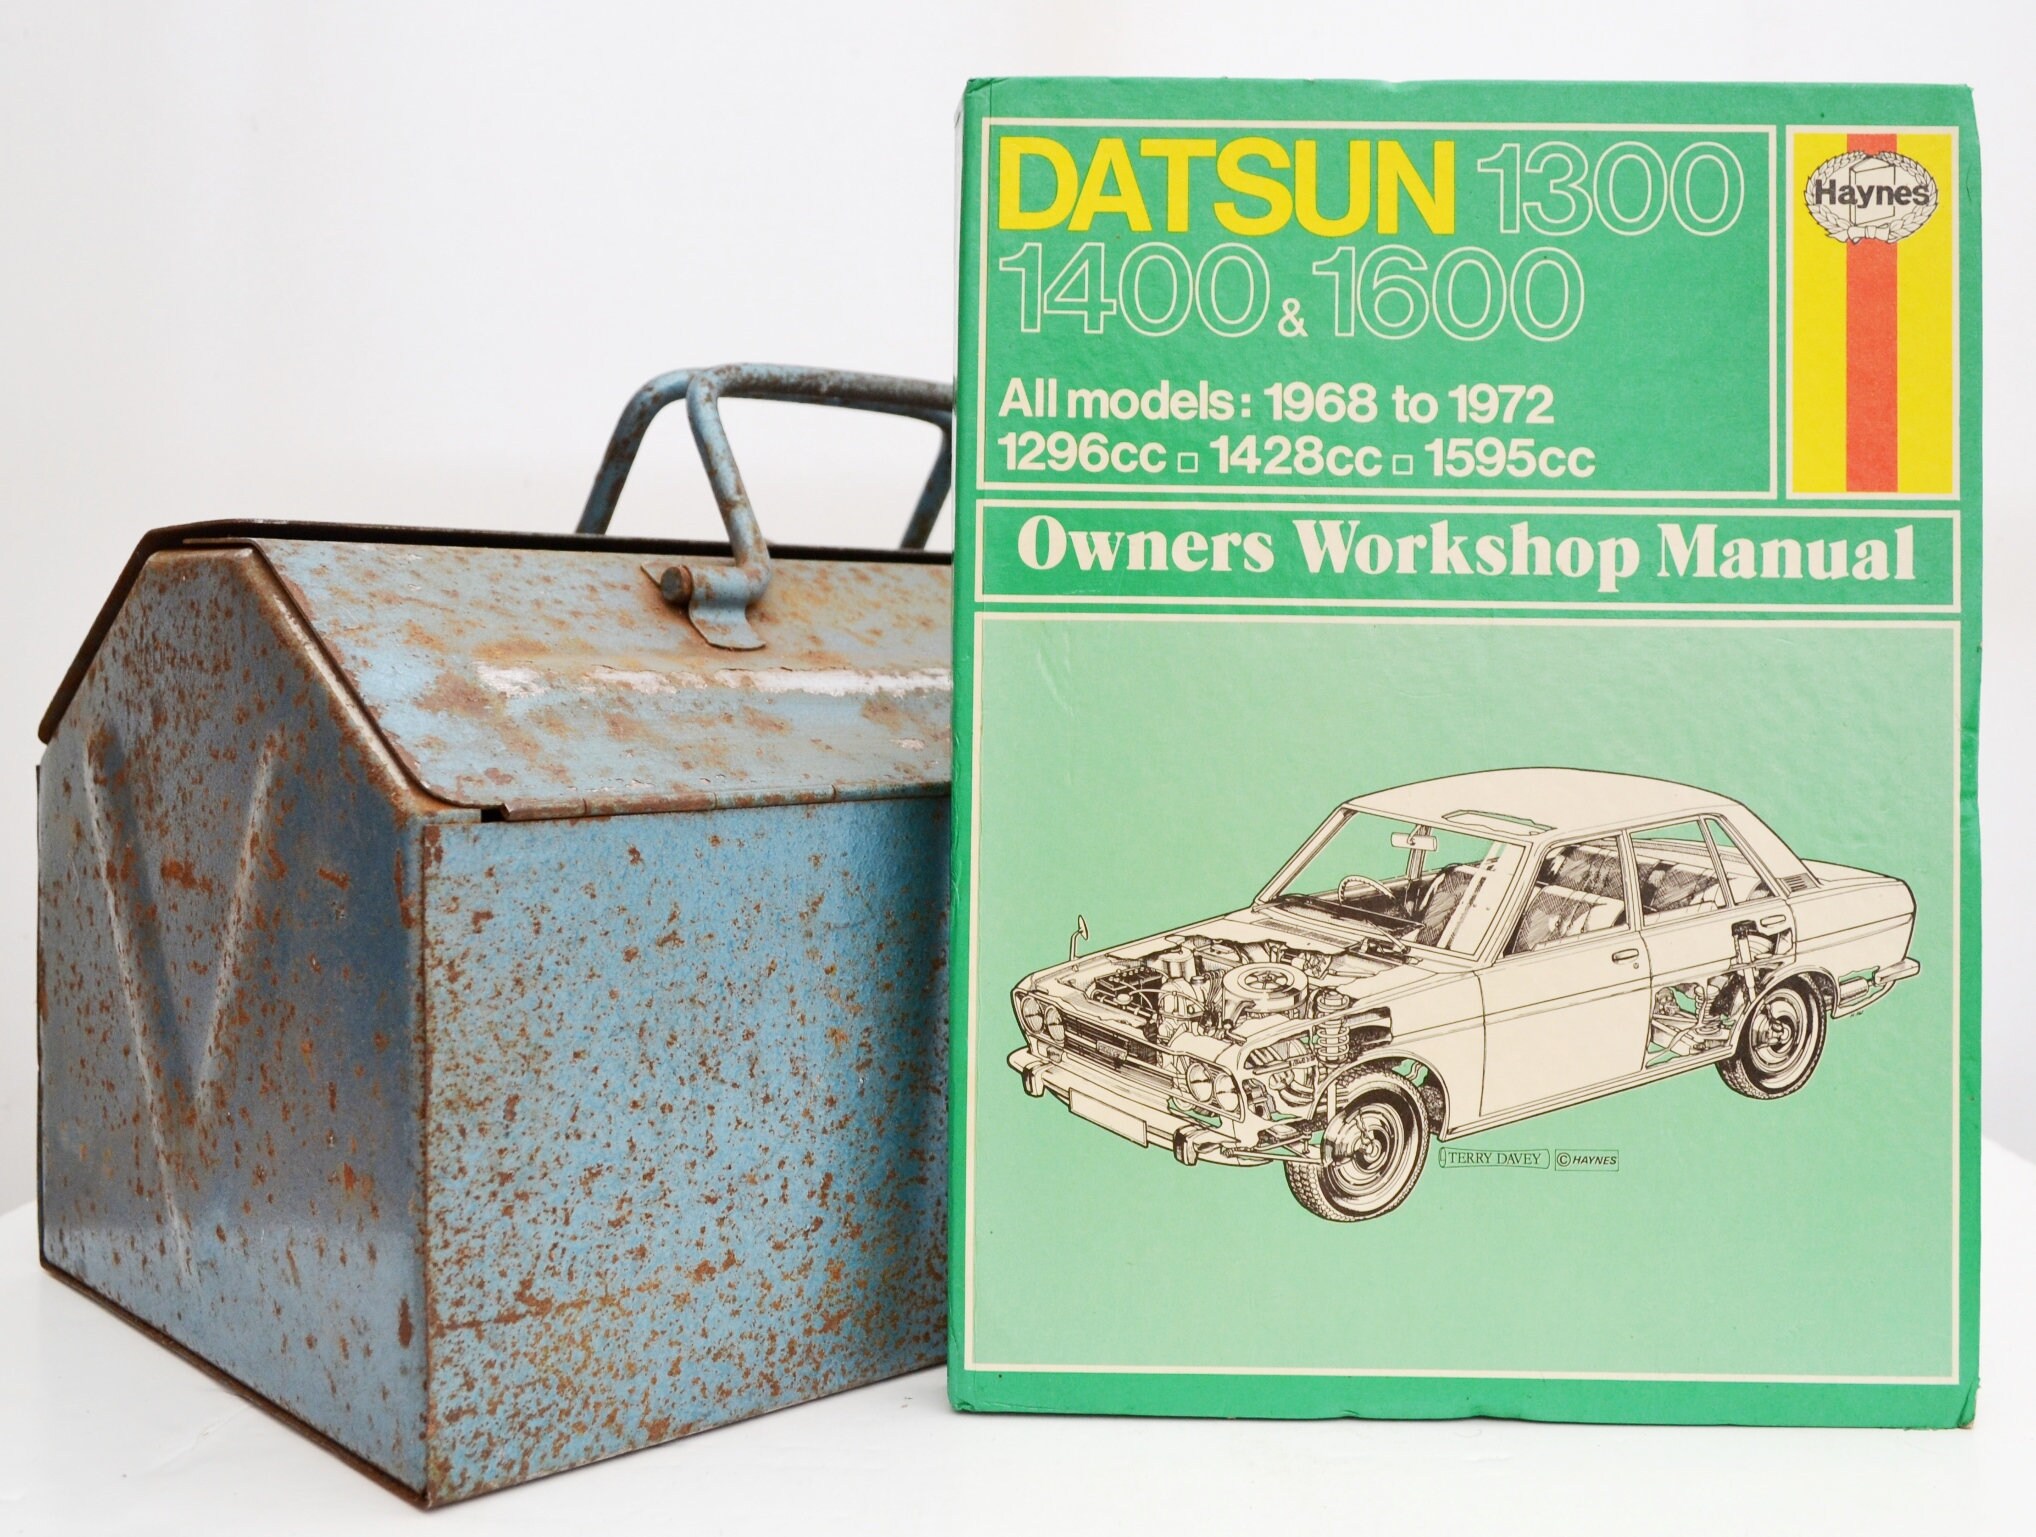 Haynes Datsun Owners Workshop Manual Datsun 1300 Owners | Etsy